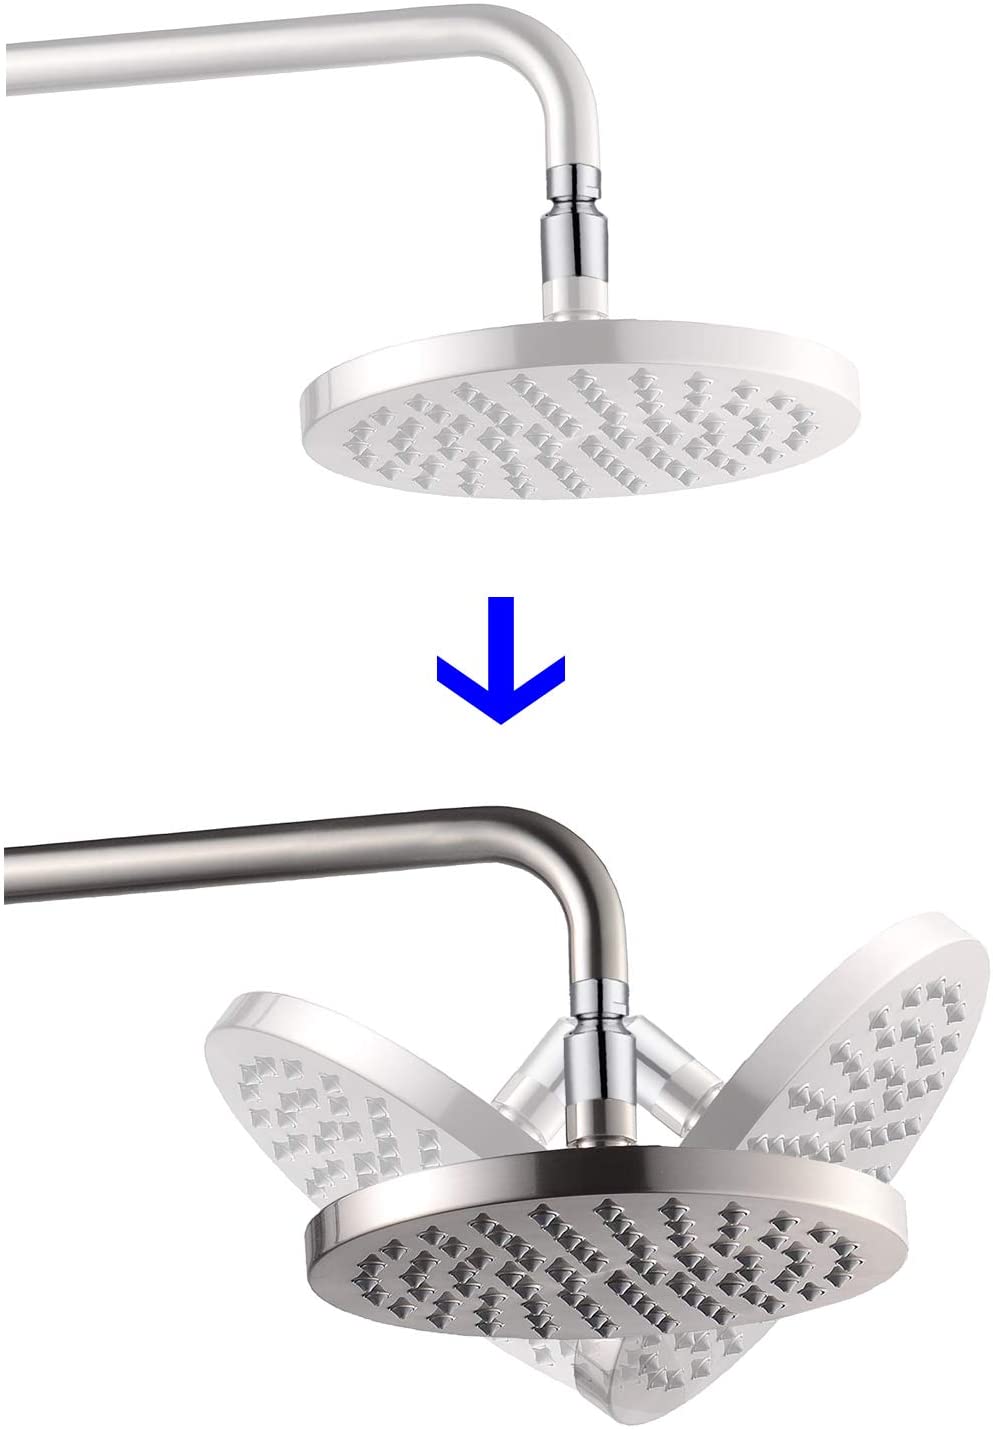 Hibbent 花洒 Hibbent Shower Head Swivel Ball Adapter Shower Parts Ball Joint Adjustable Shower Arm Connector